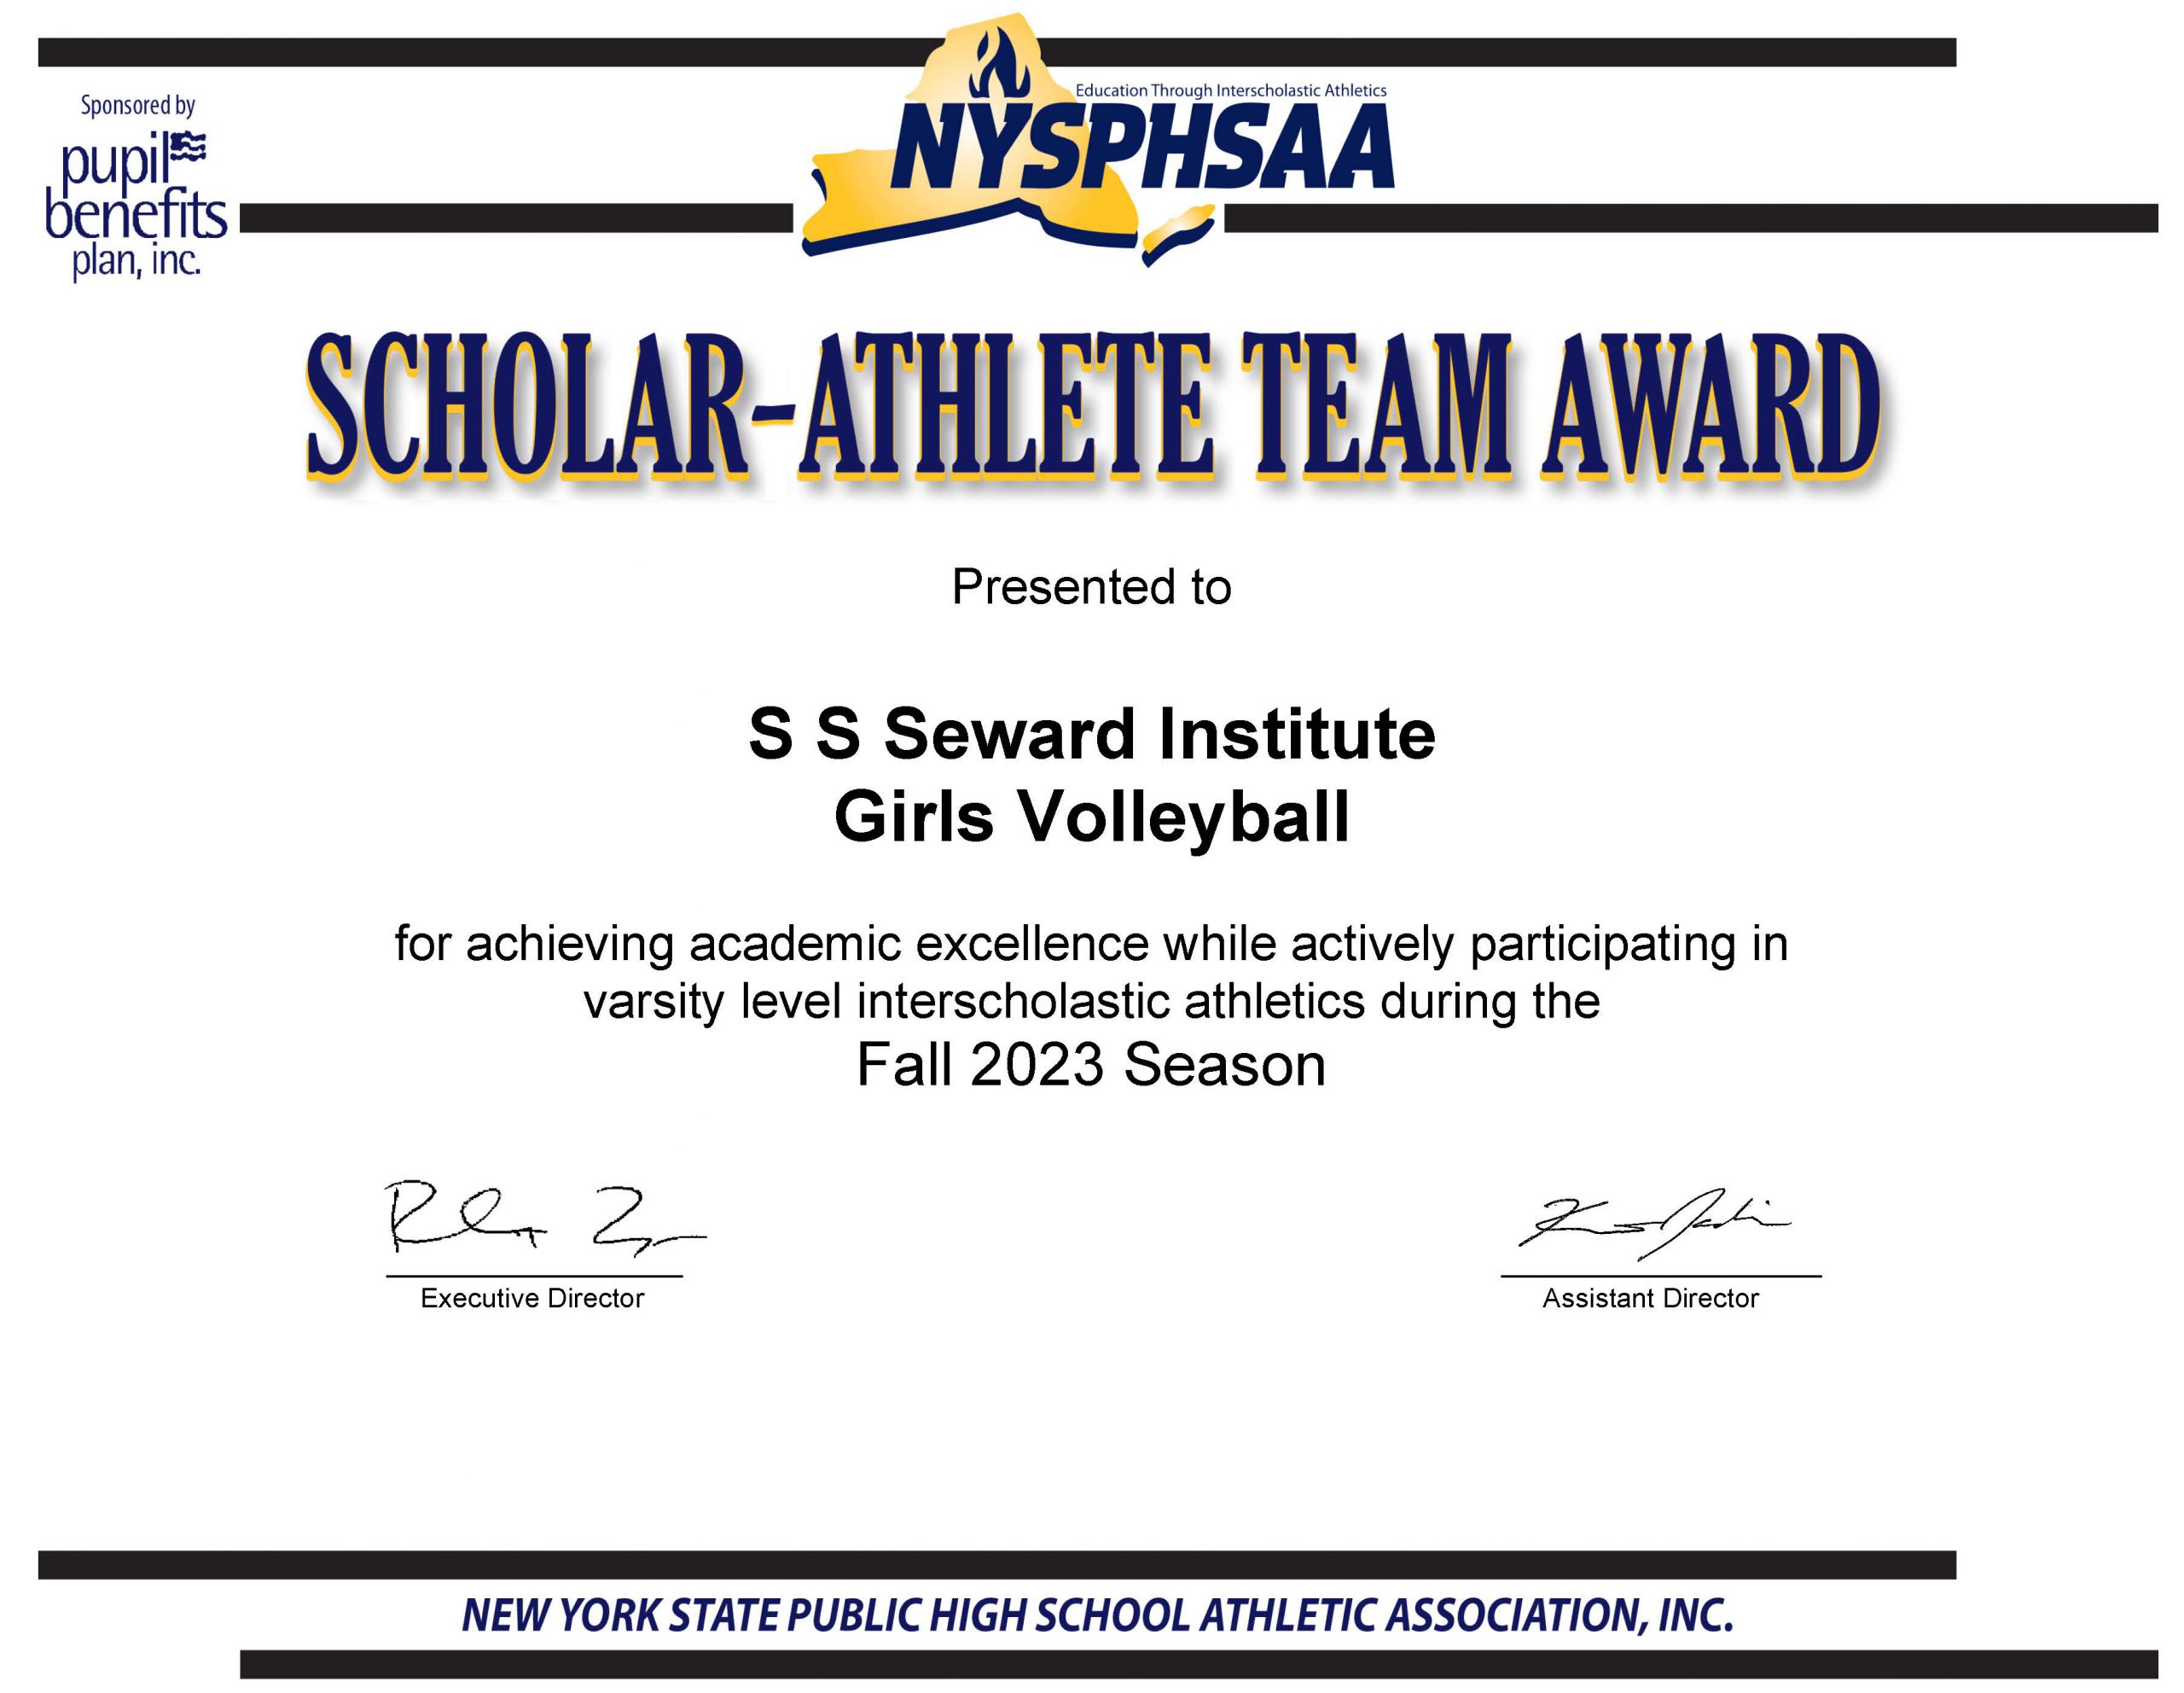 Girls Varsity Scholar-Athlete Team Award